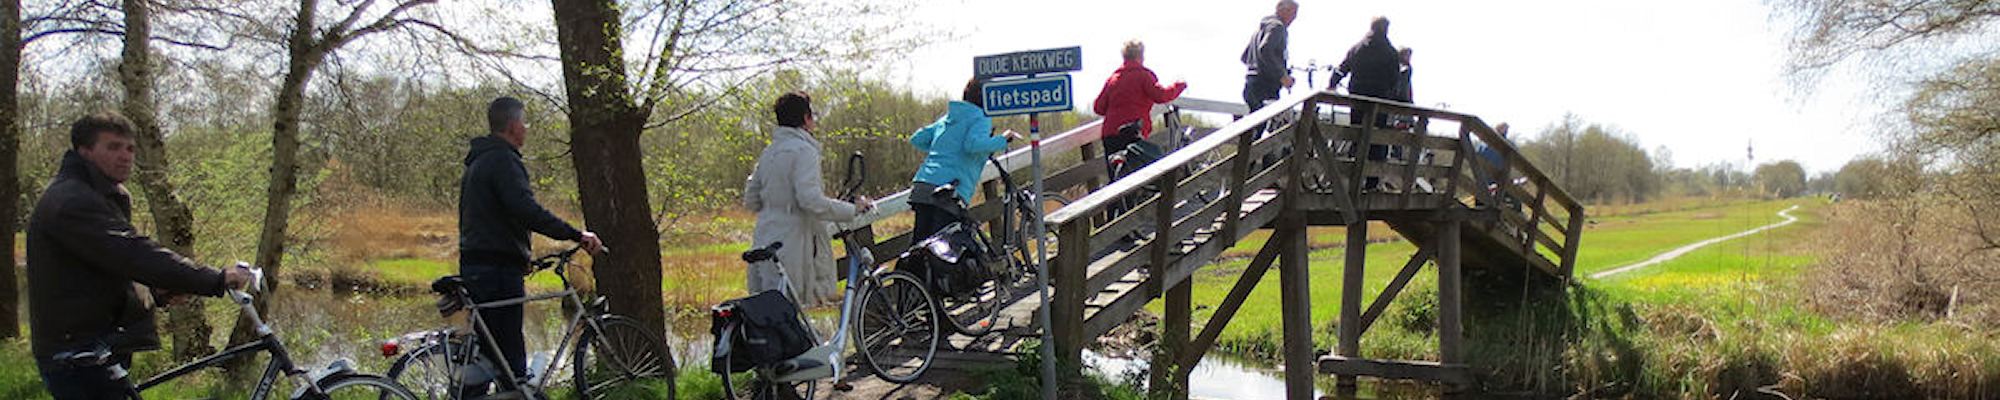 custom cycling holiday netherlands